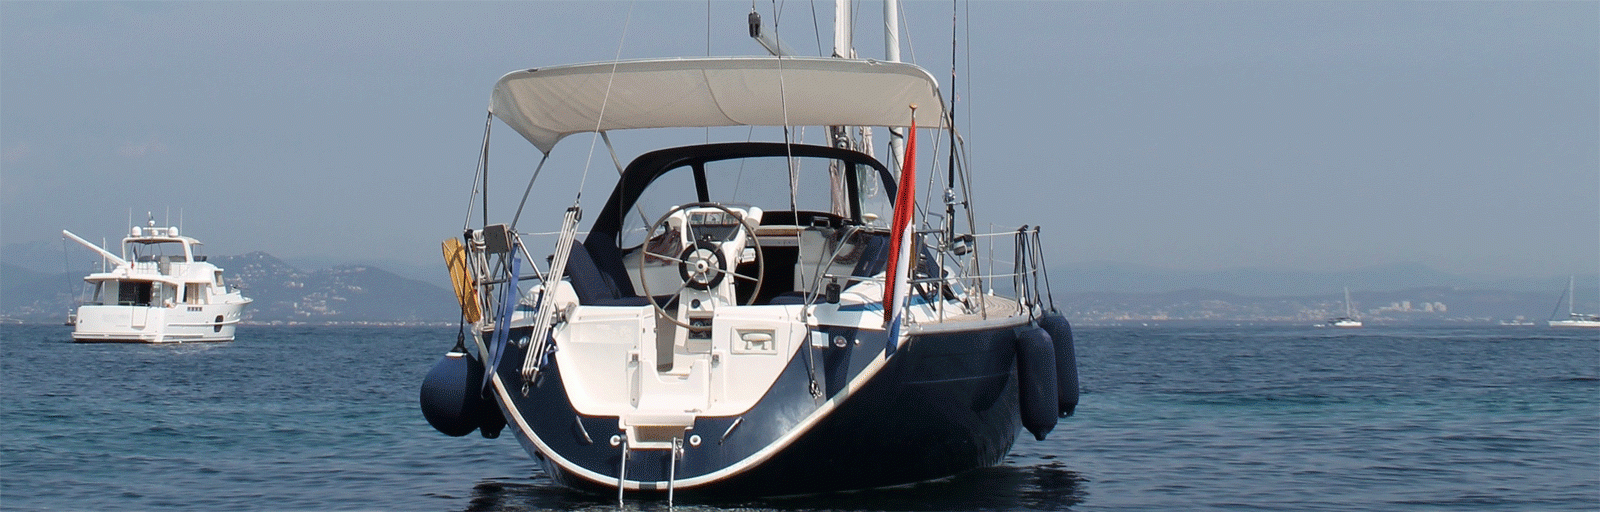 AYC - BAVARIA 37 - at anchorage